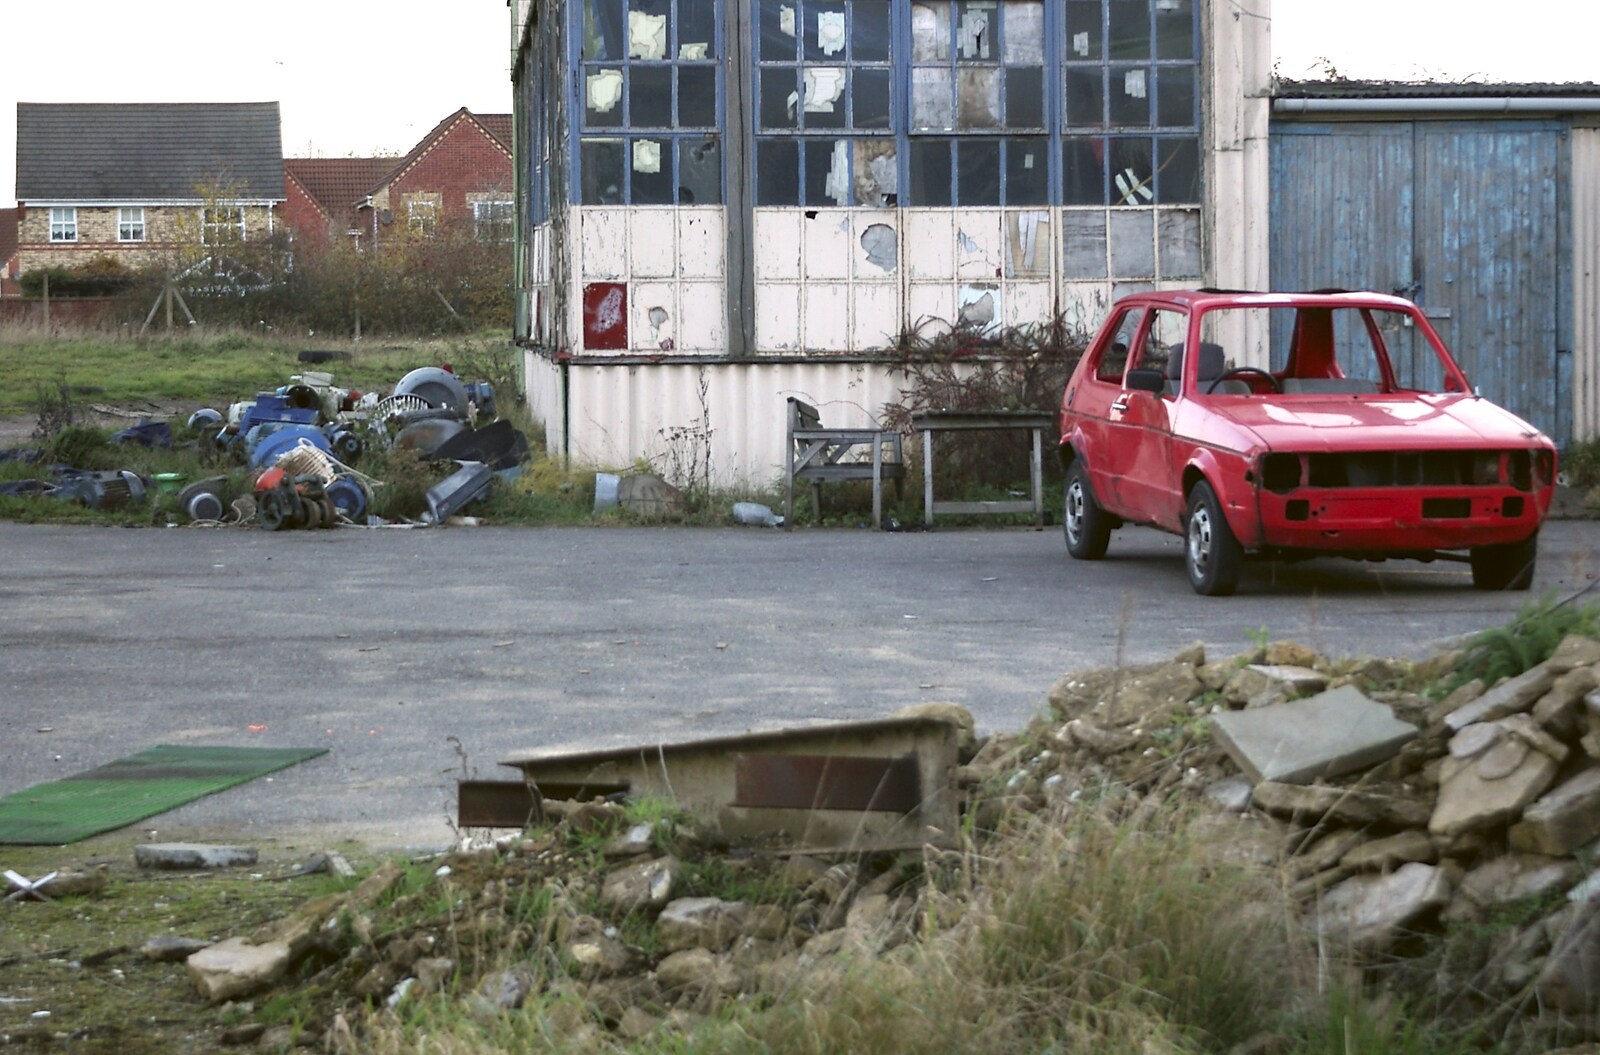 Car wreck and detritus from Random Scenes of Diss, Norfolk - 20th November 2004